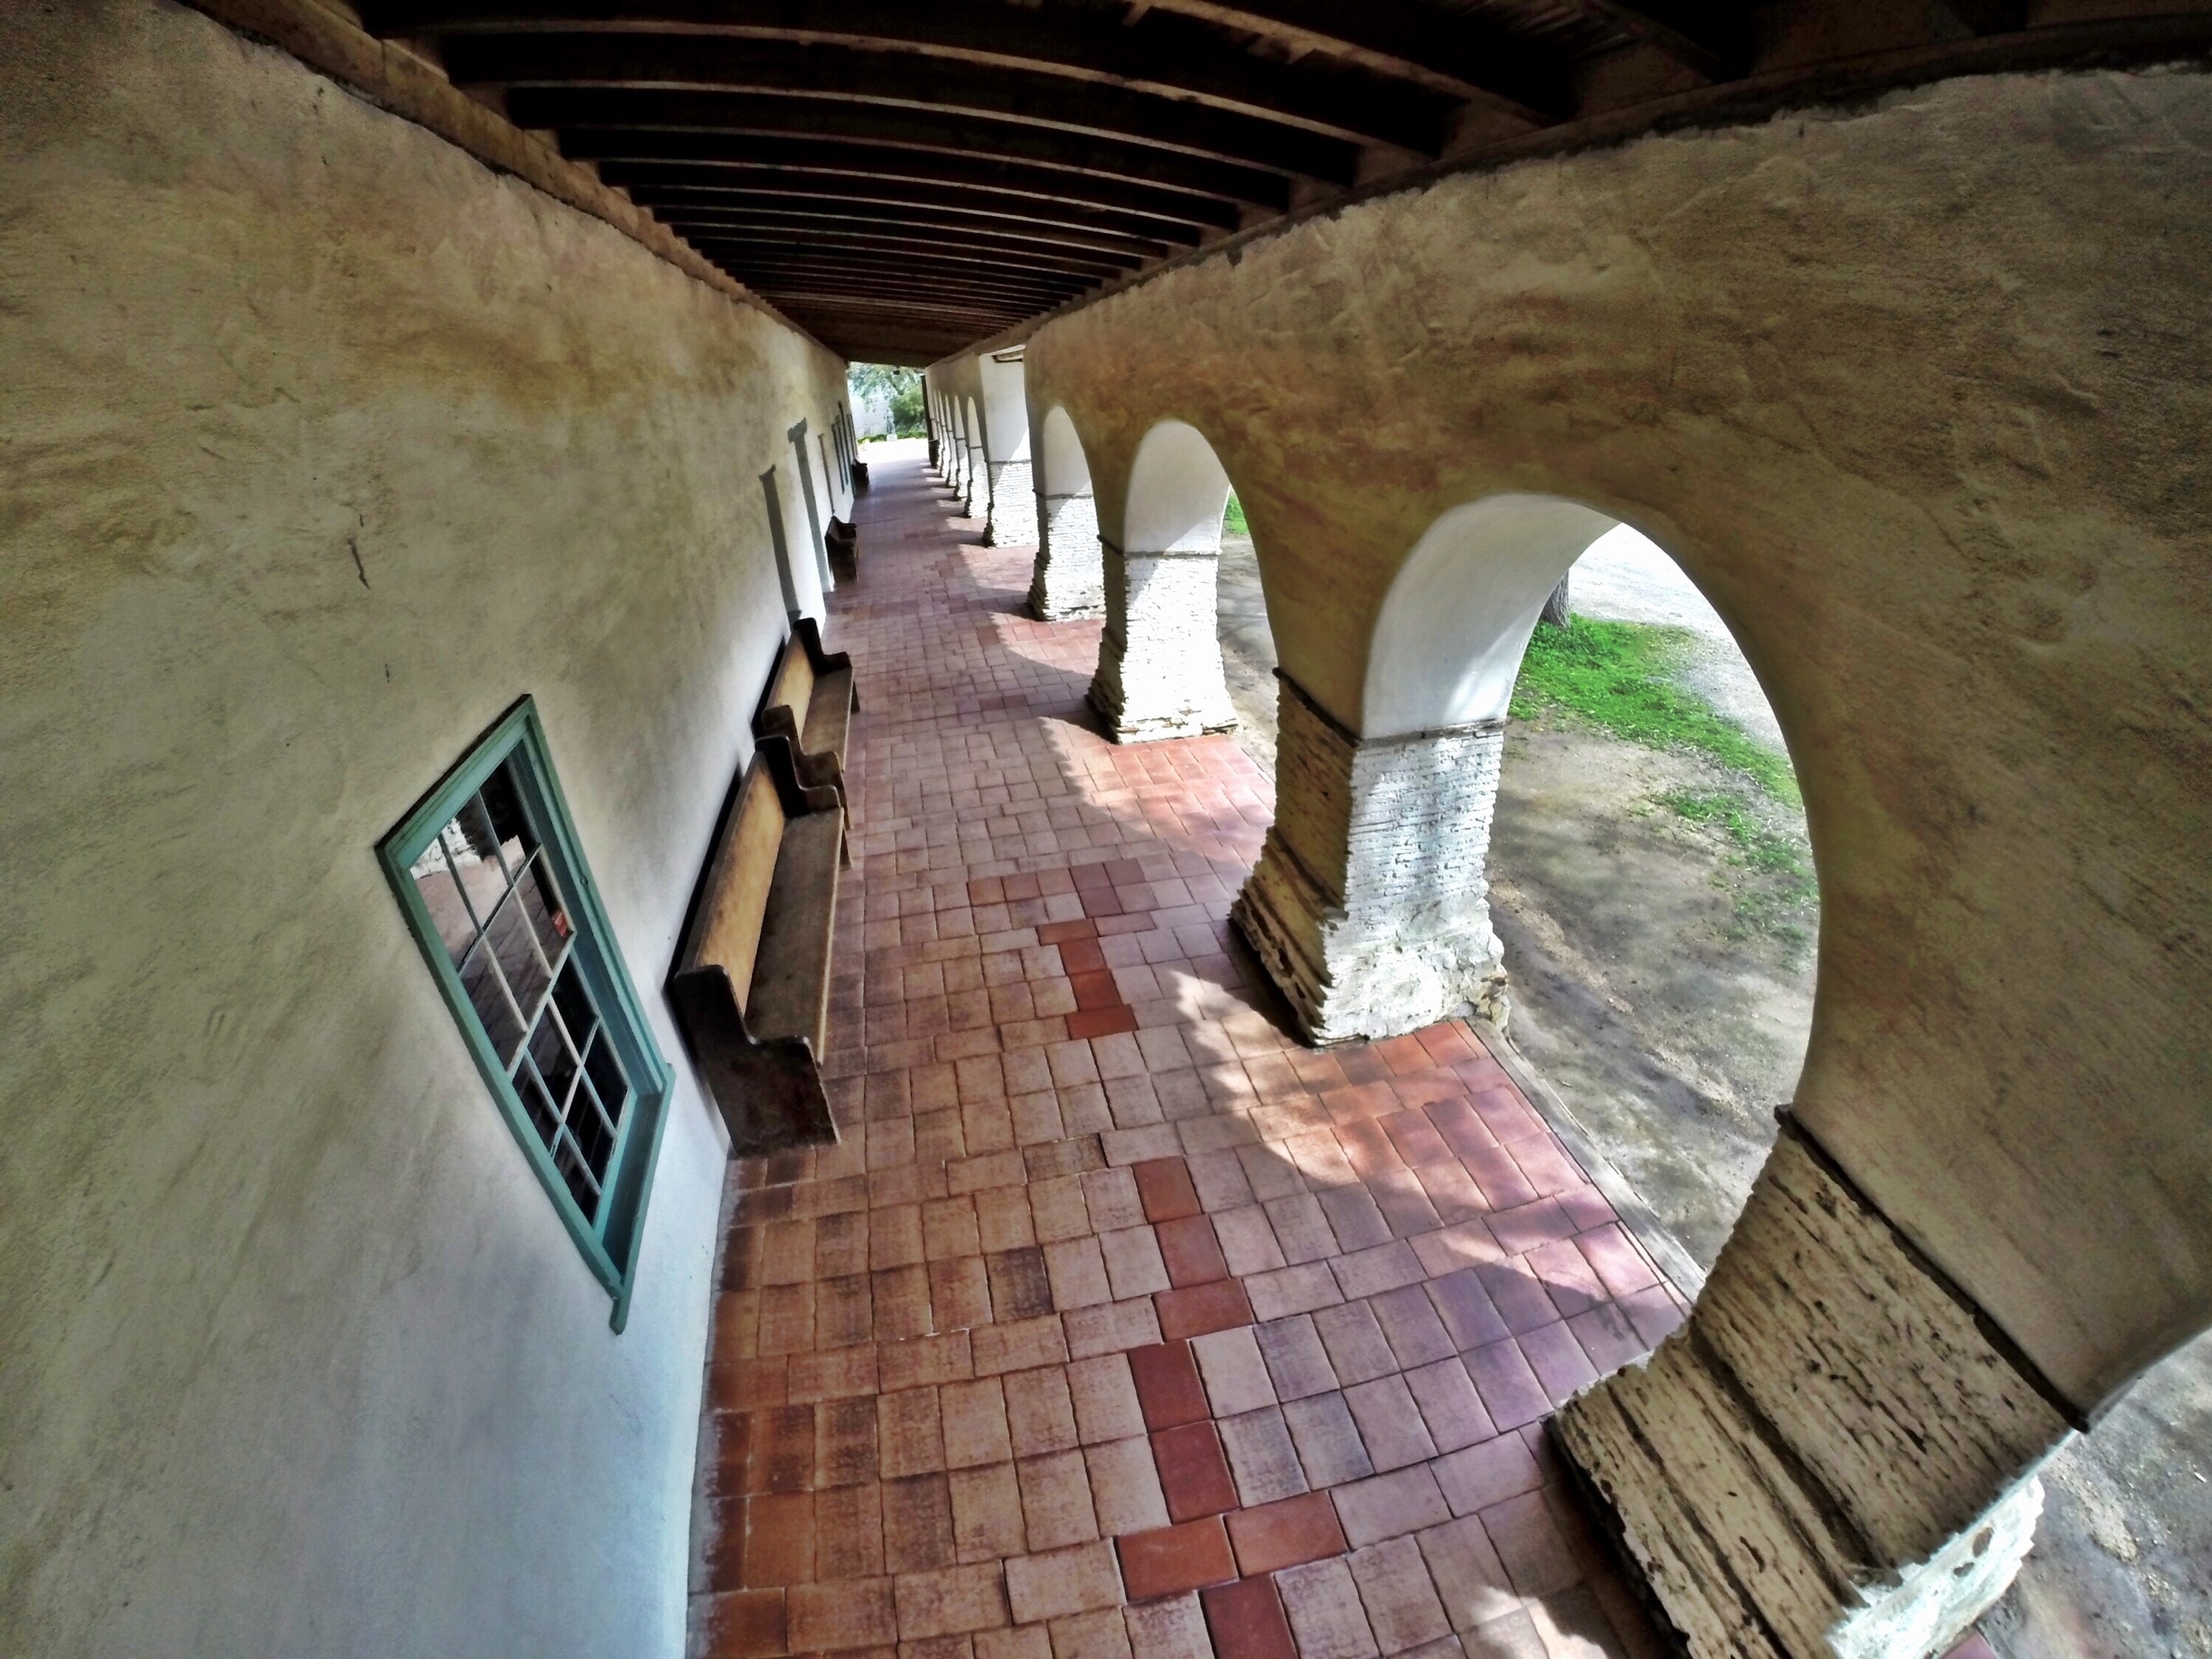 The hallway of Mission San Juan Bautista